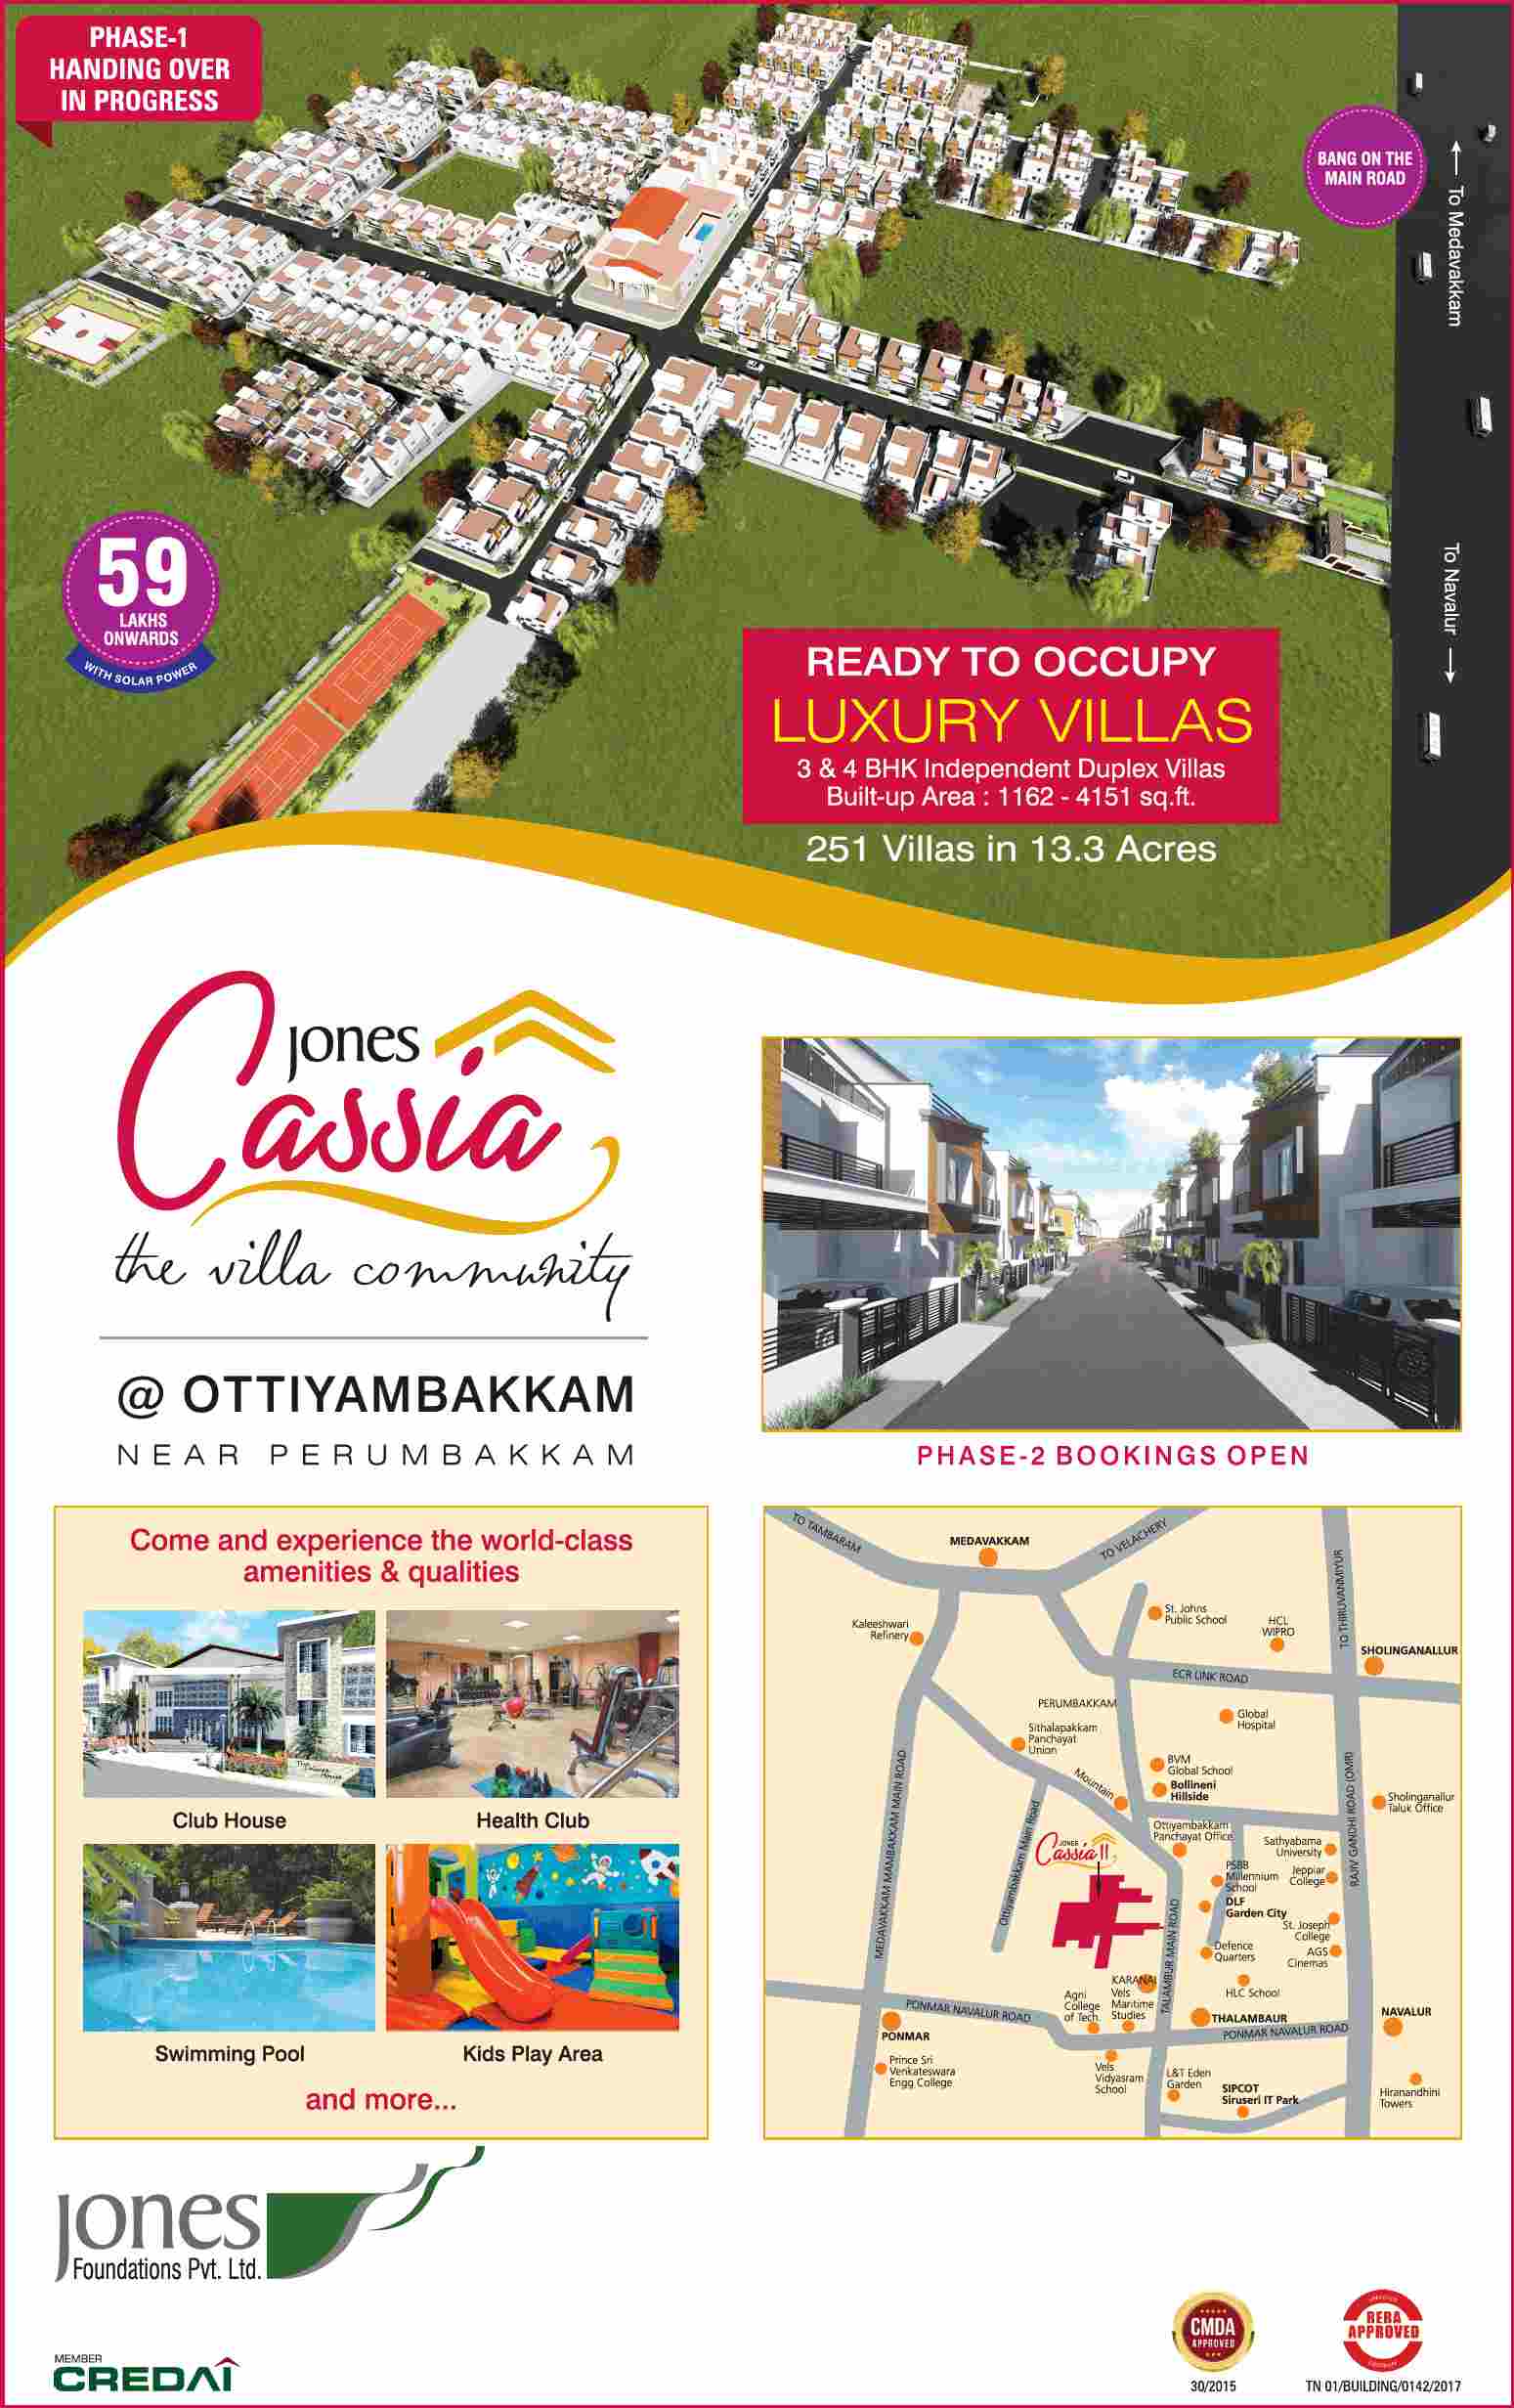 Book ready to occupy luxury villas at Jones Cassia in Chennai Update